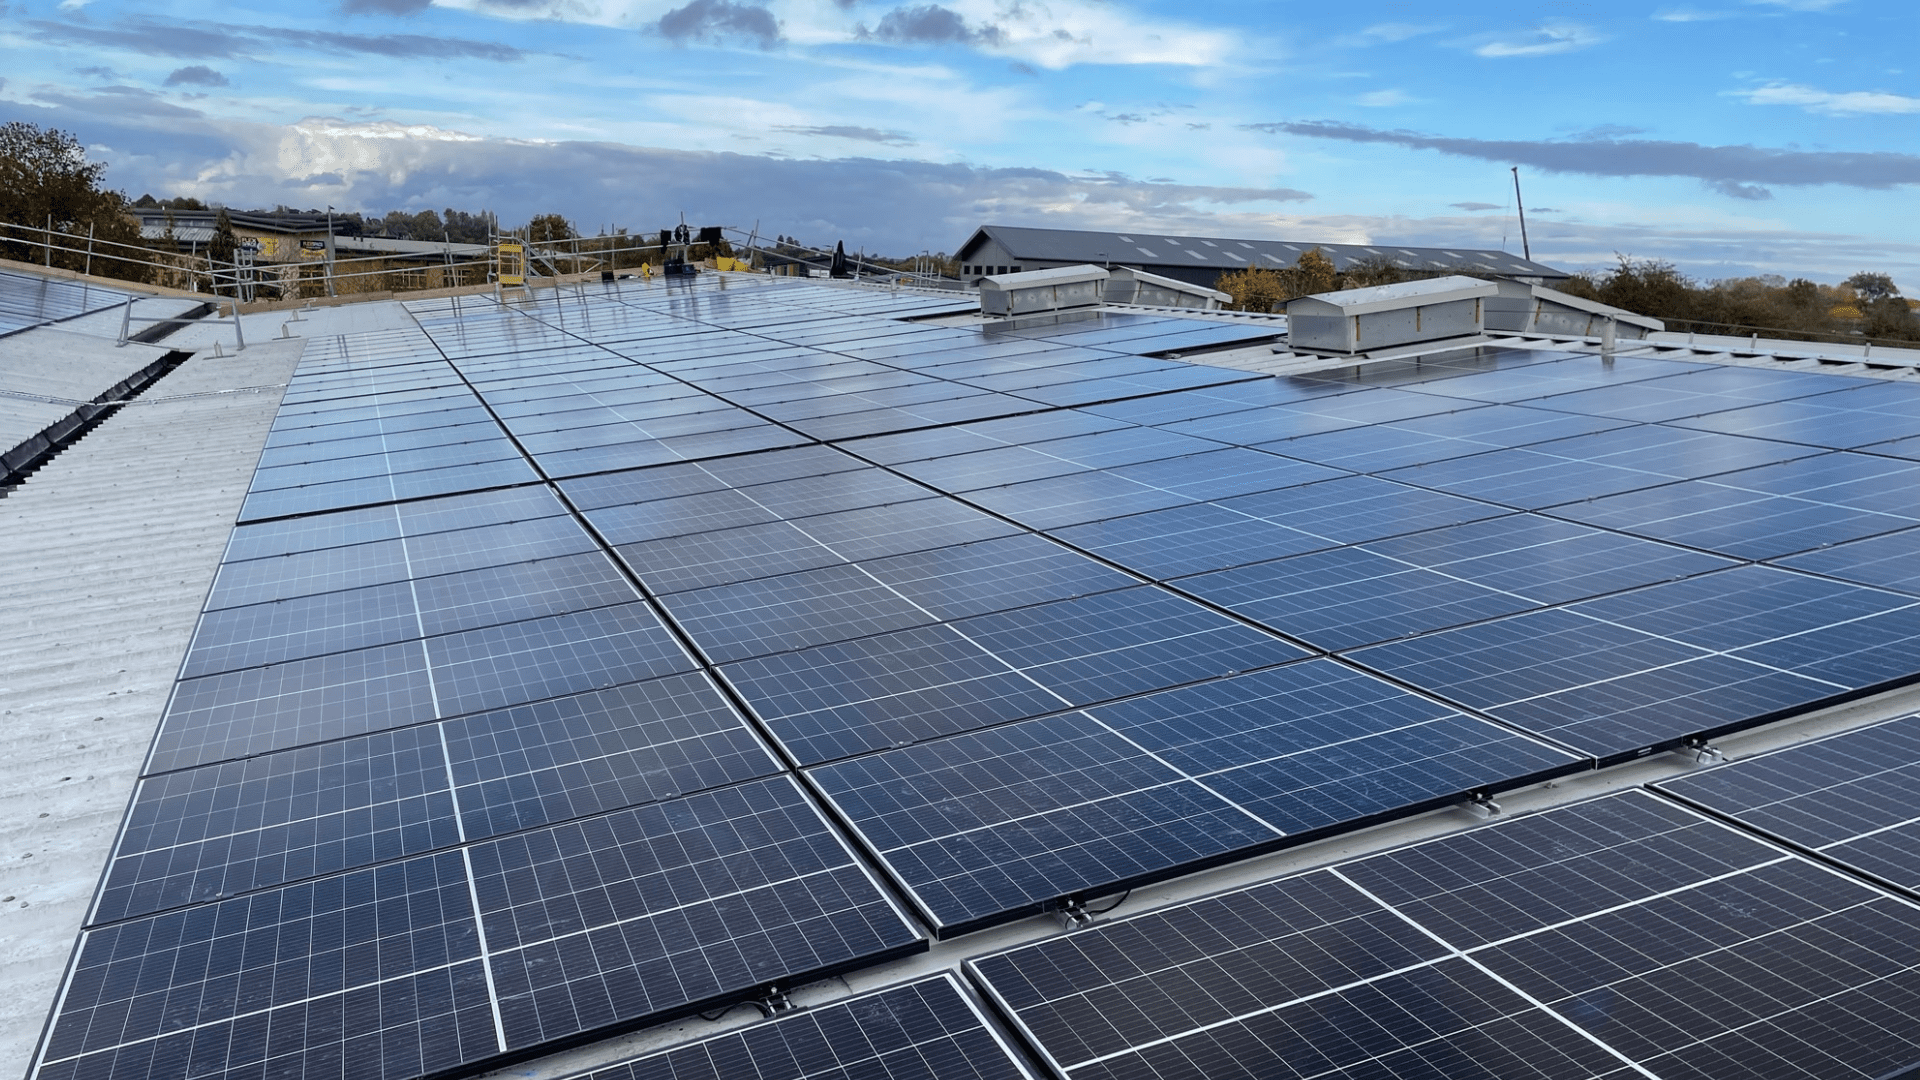 Solar Panel Installation - Solar panels on building rood